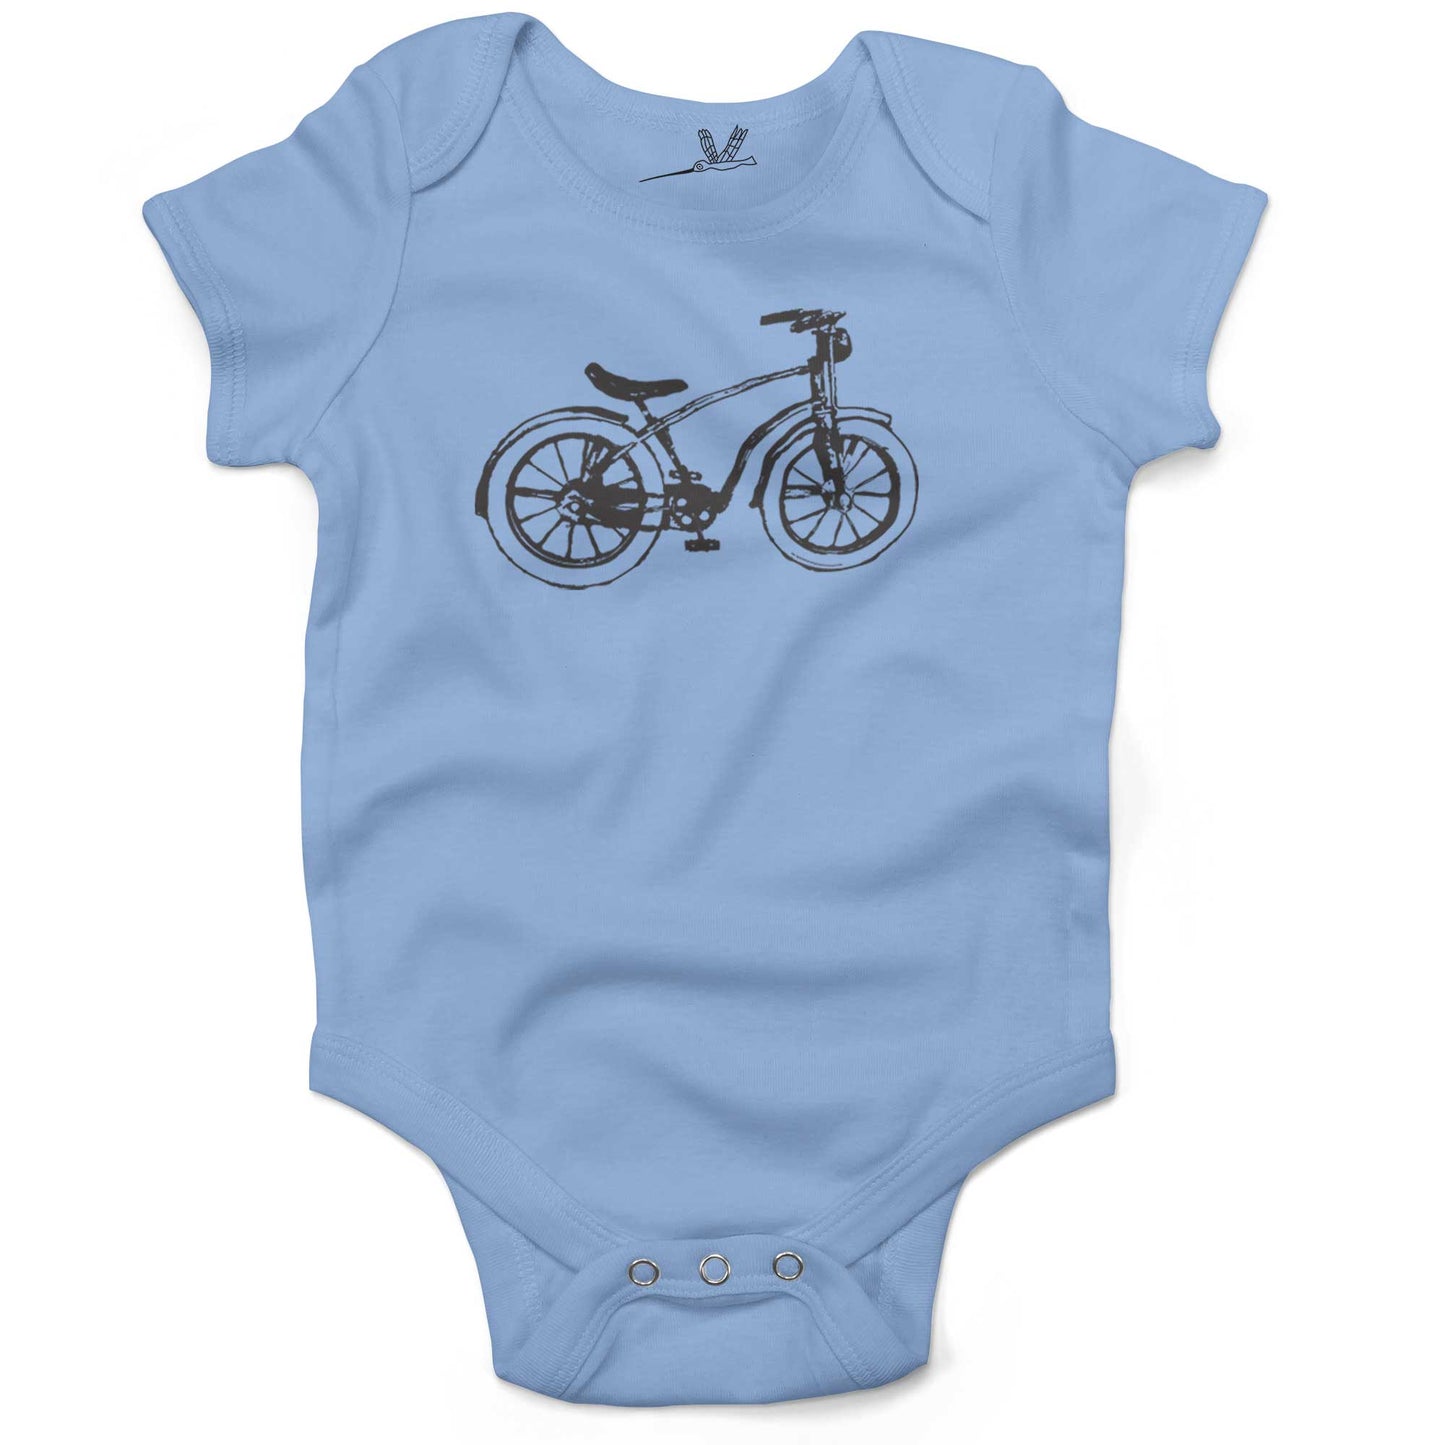 Vintage Bike Infant Bodysuit or Raglan Baby Tee-Organic Baby Blue-3-6 months